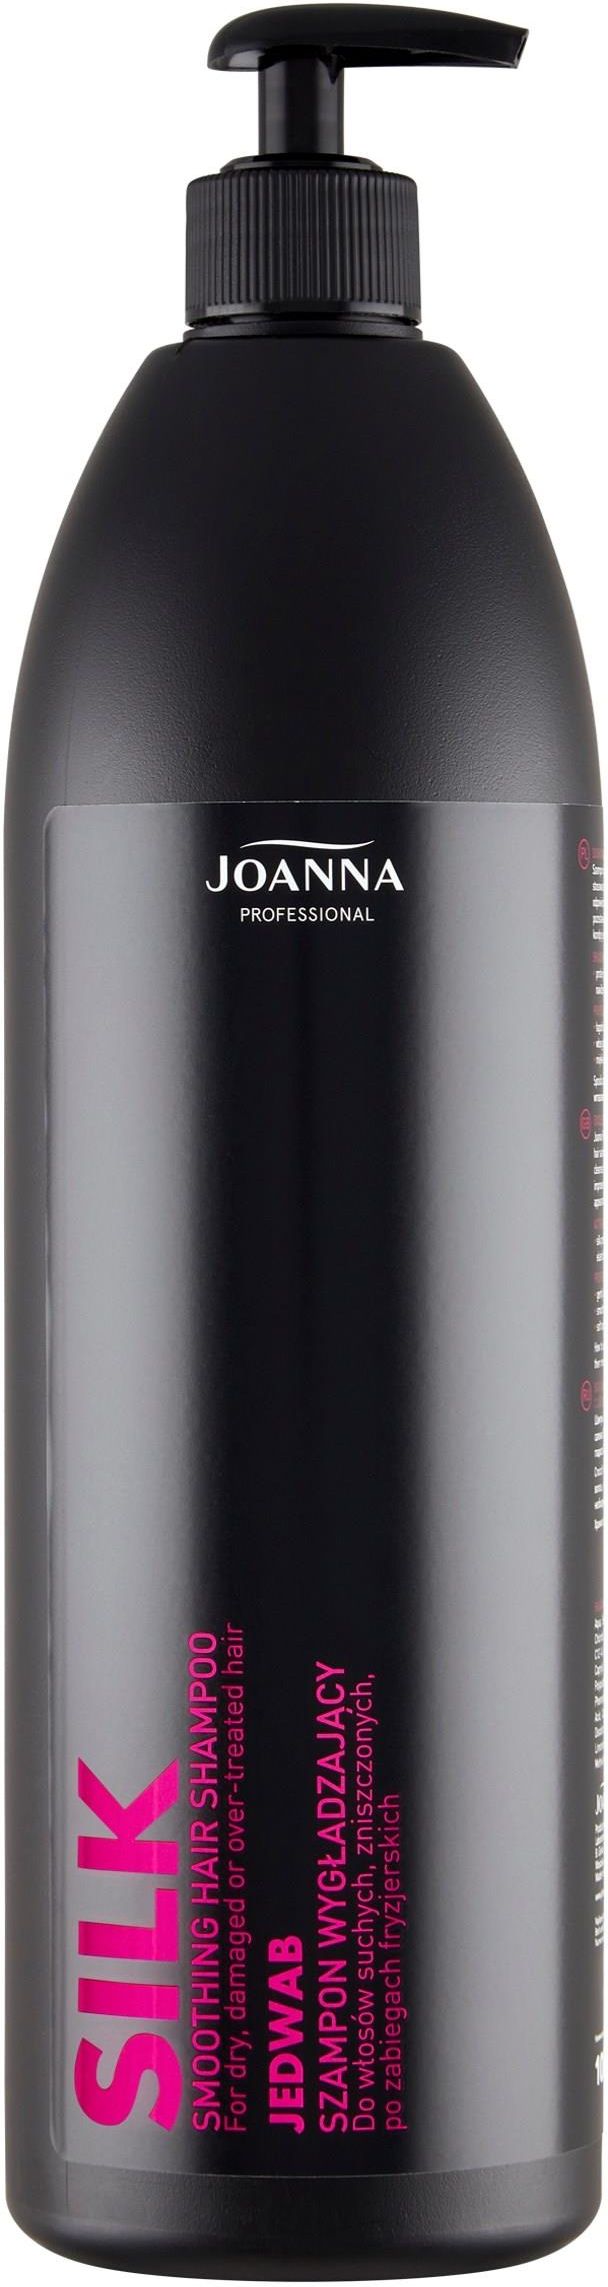 szampon joanna 1l